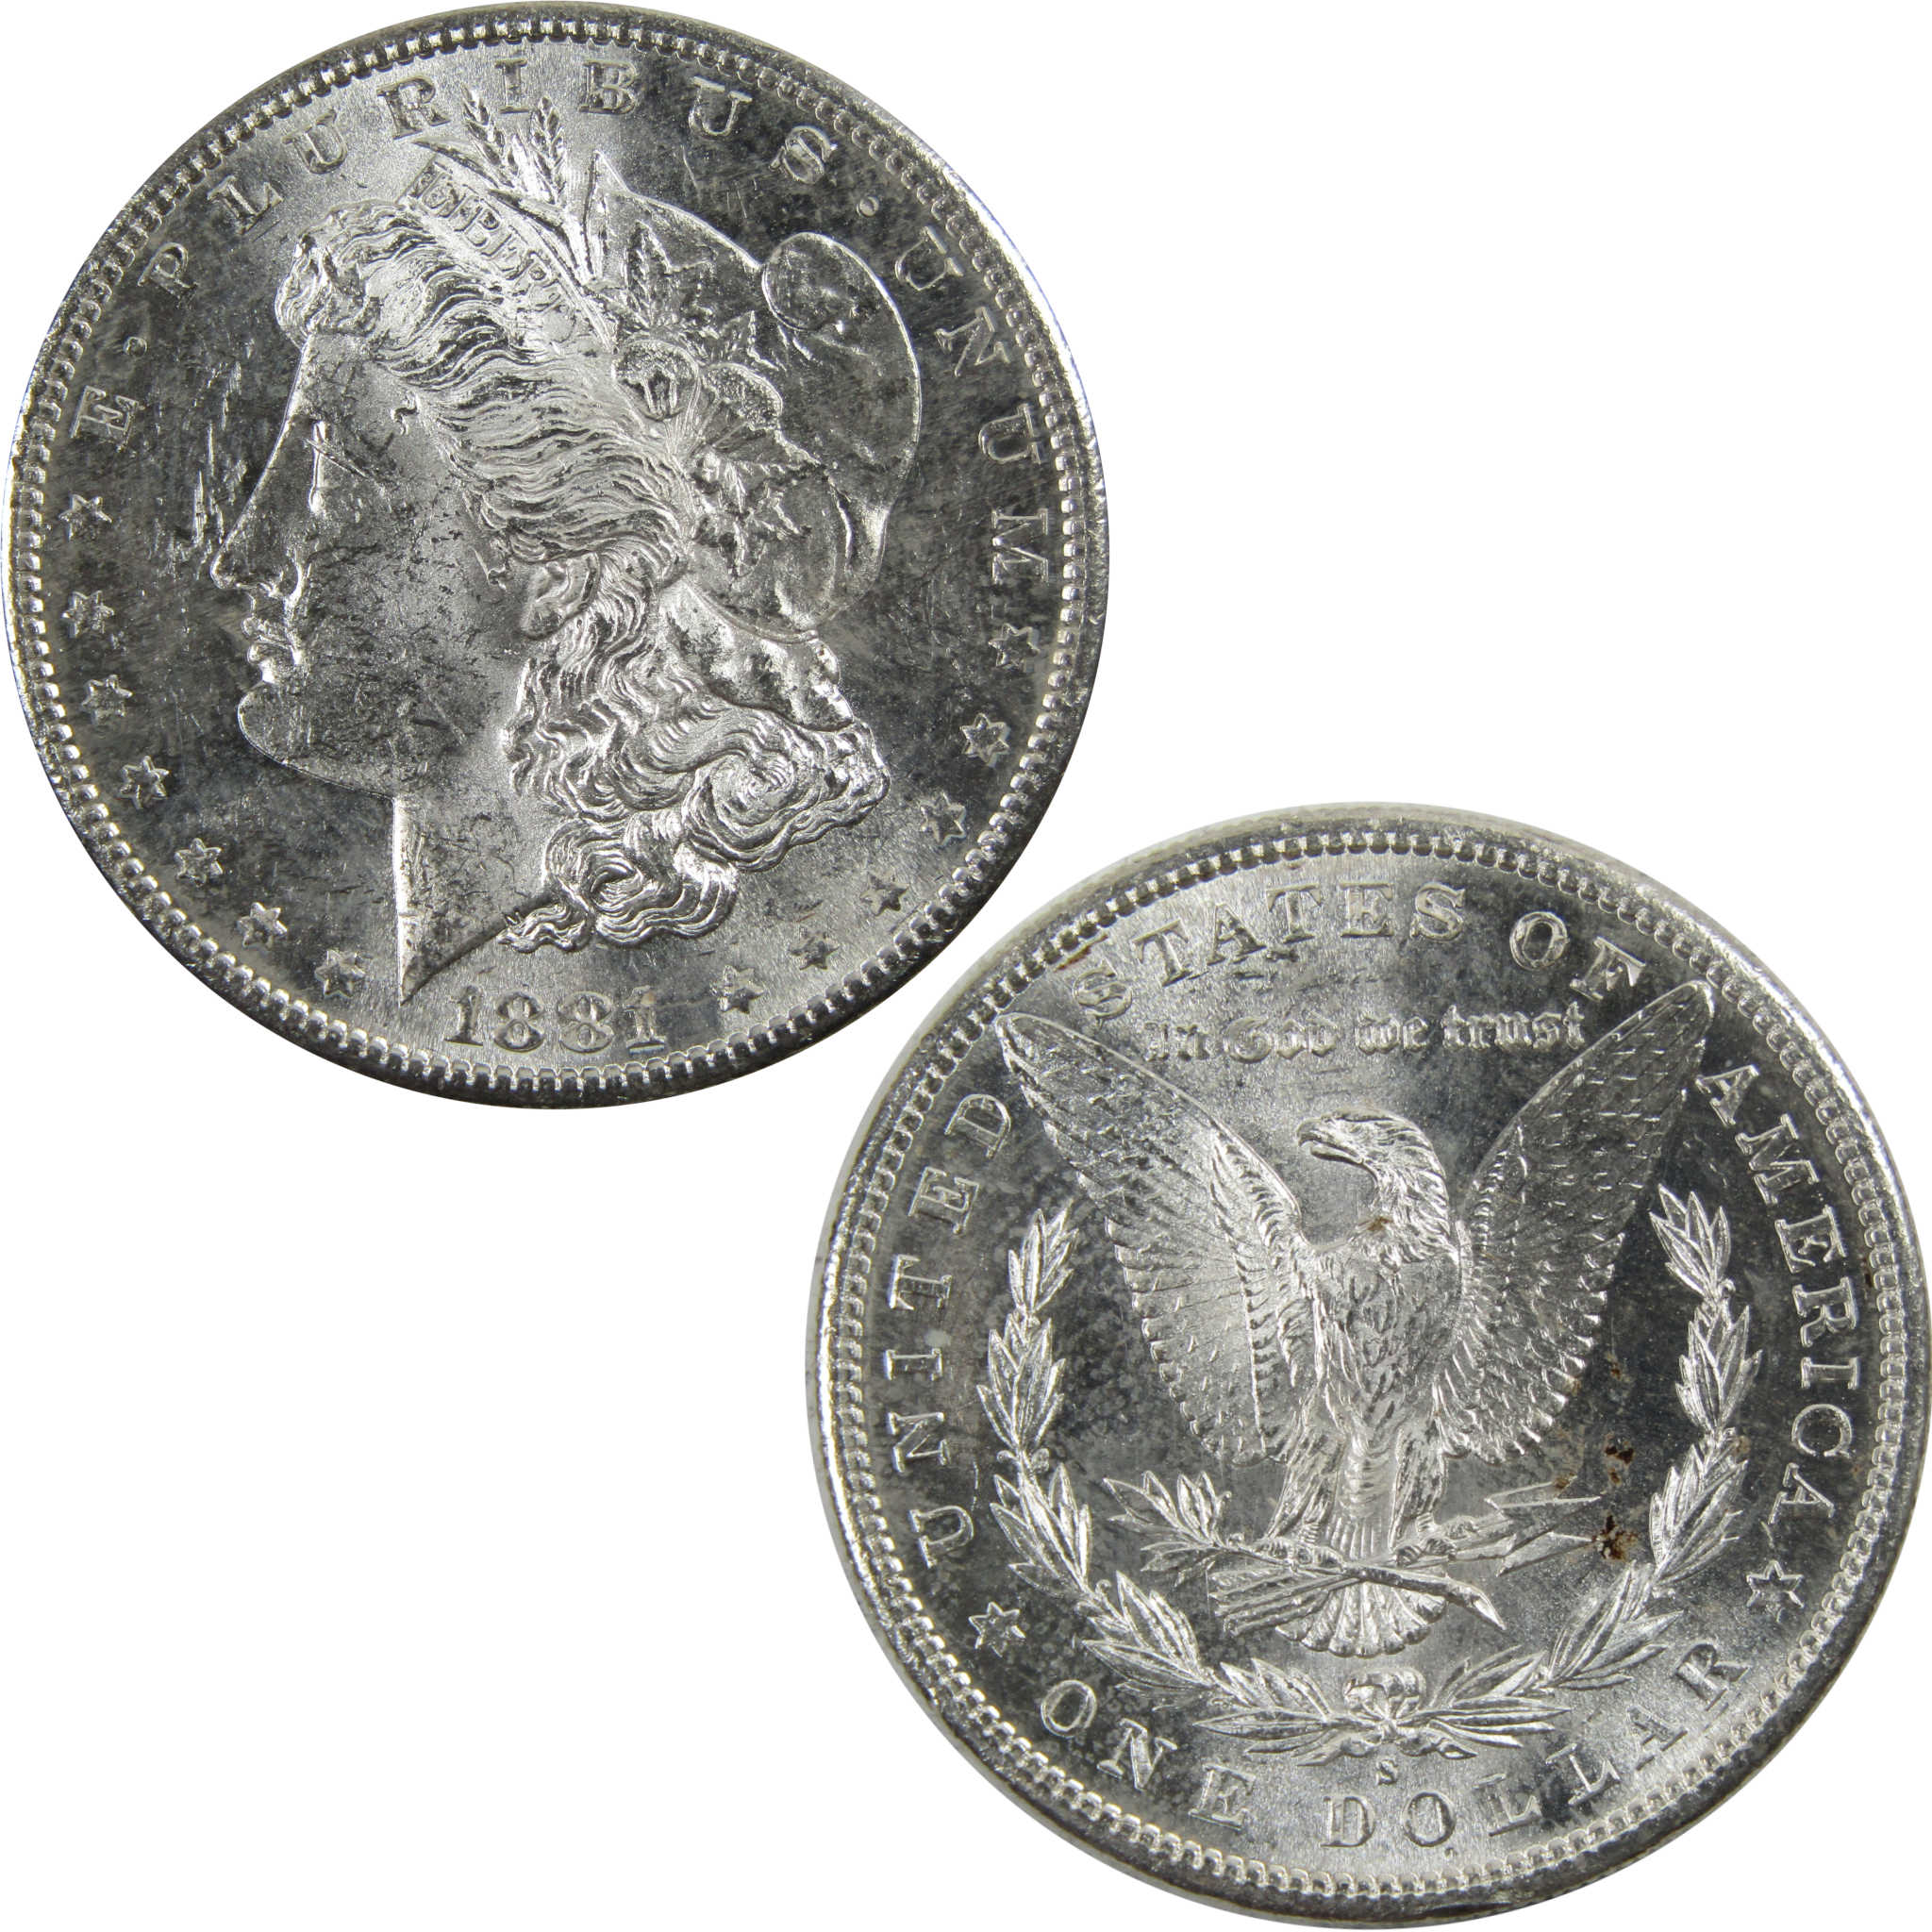 1881 S Morgan Dollar BU Uncirculated 90% Silver $1 Coin SKU:I5310 - Morgan coin - Morgan silver dollar - Morgan silver dollar for sale - Profile Coins &amp; Collectibles